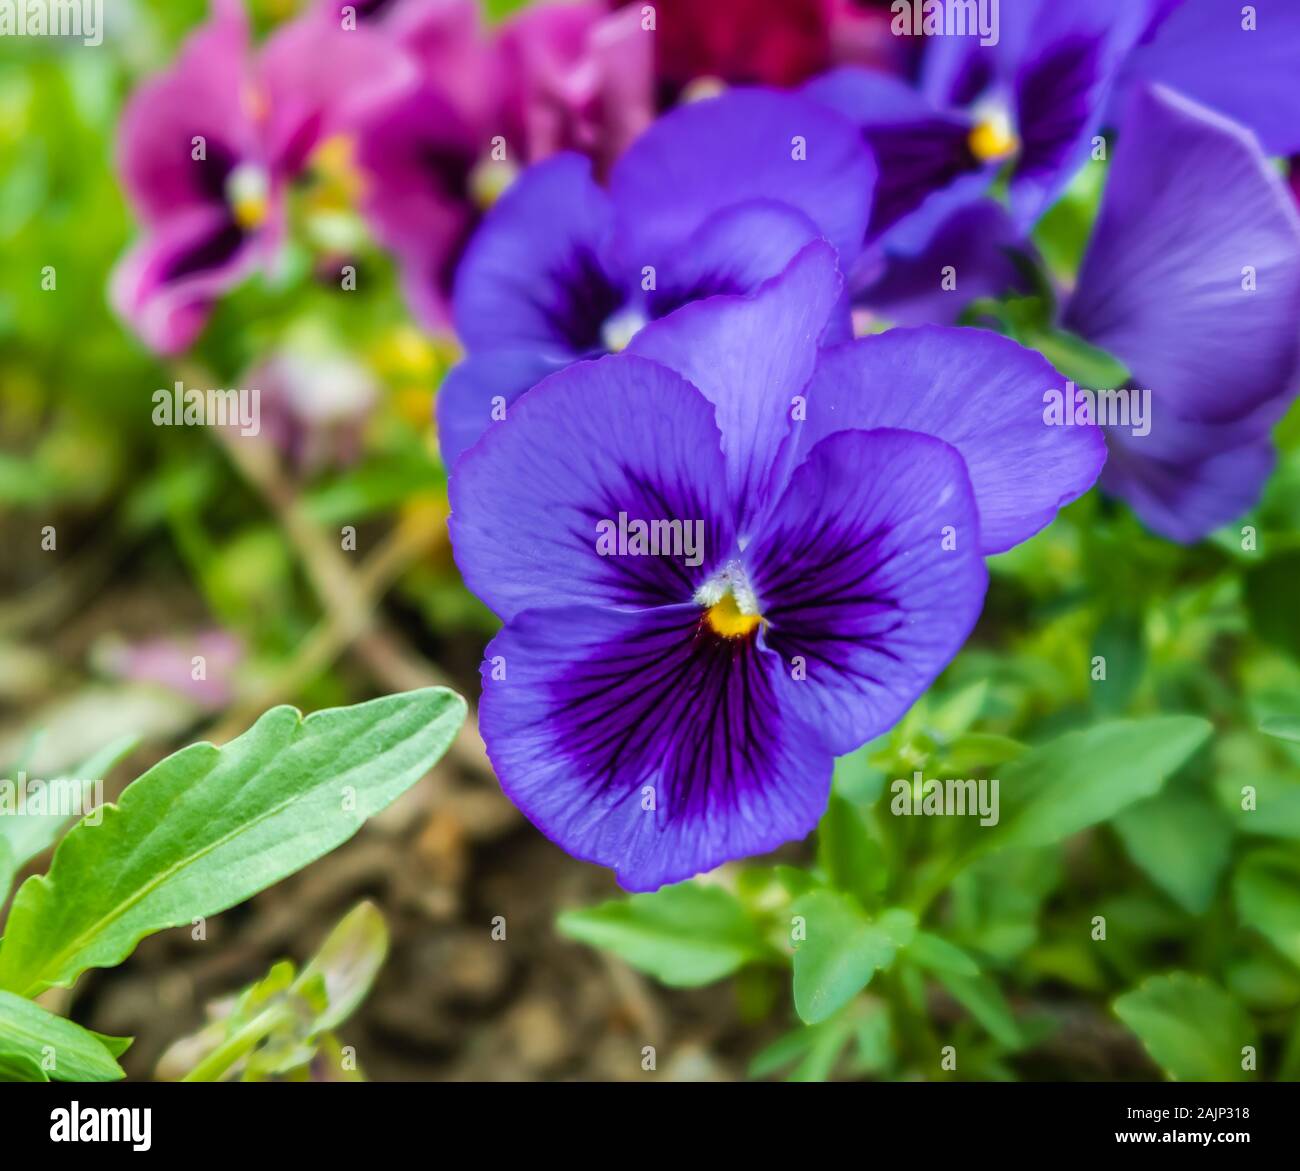 Purple pansies in the garden Stock Photo